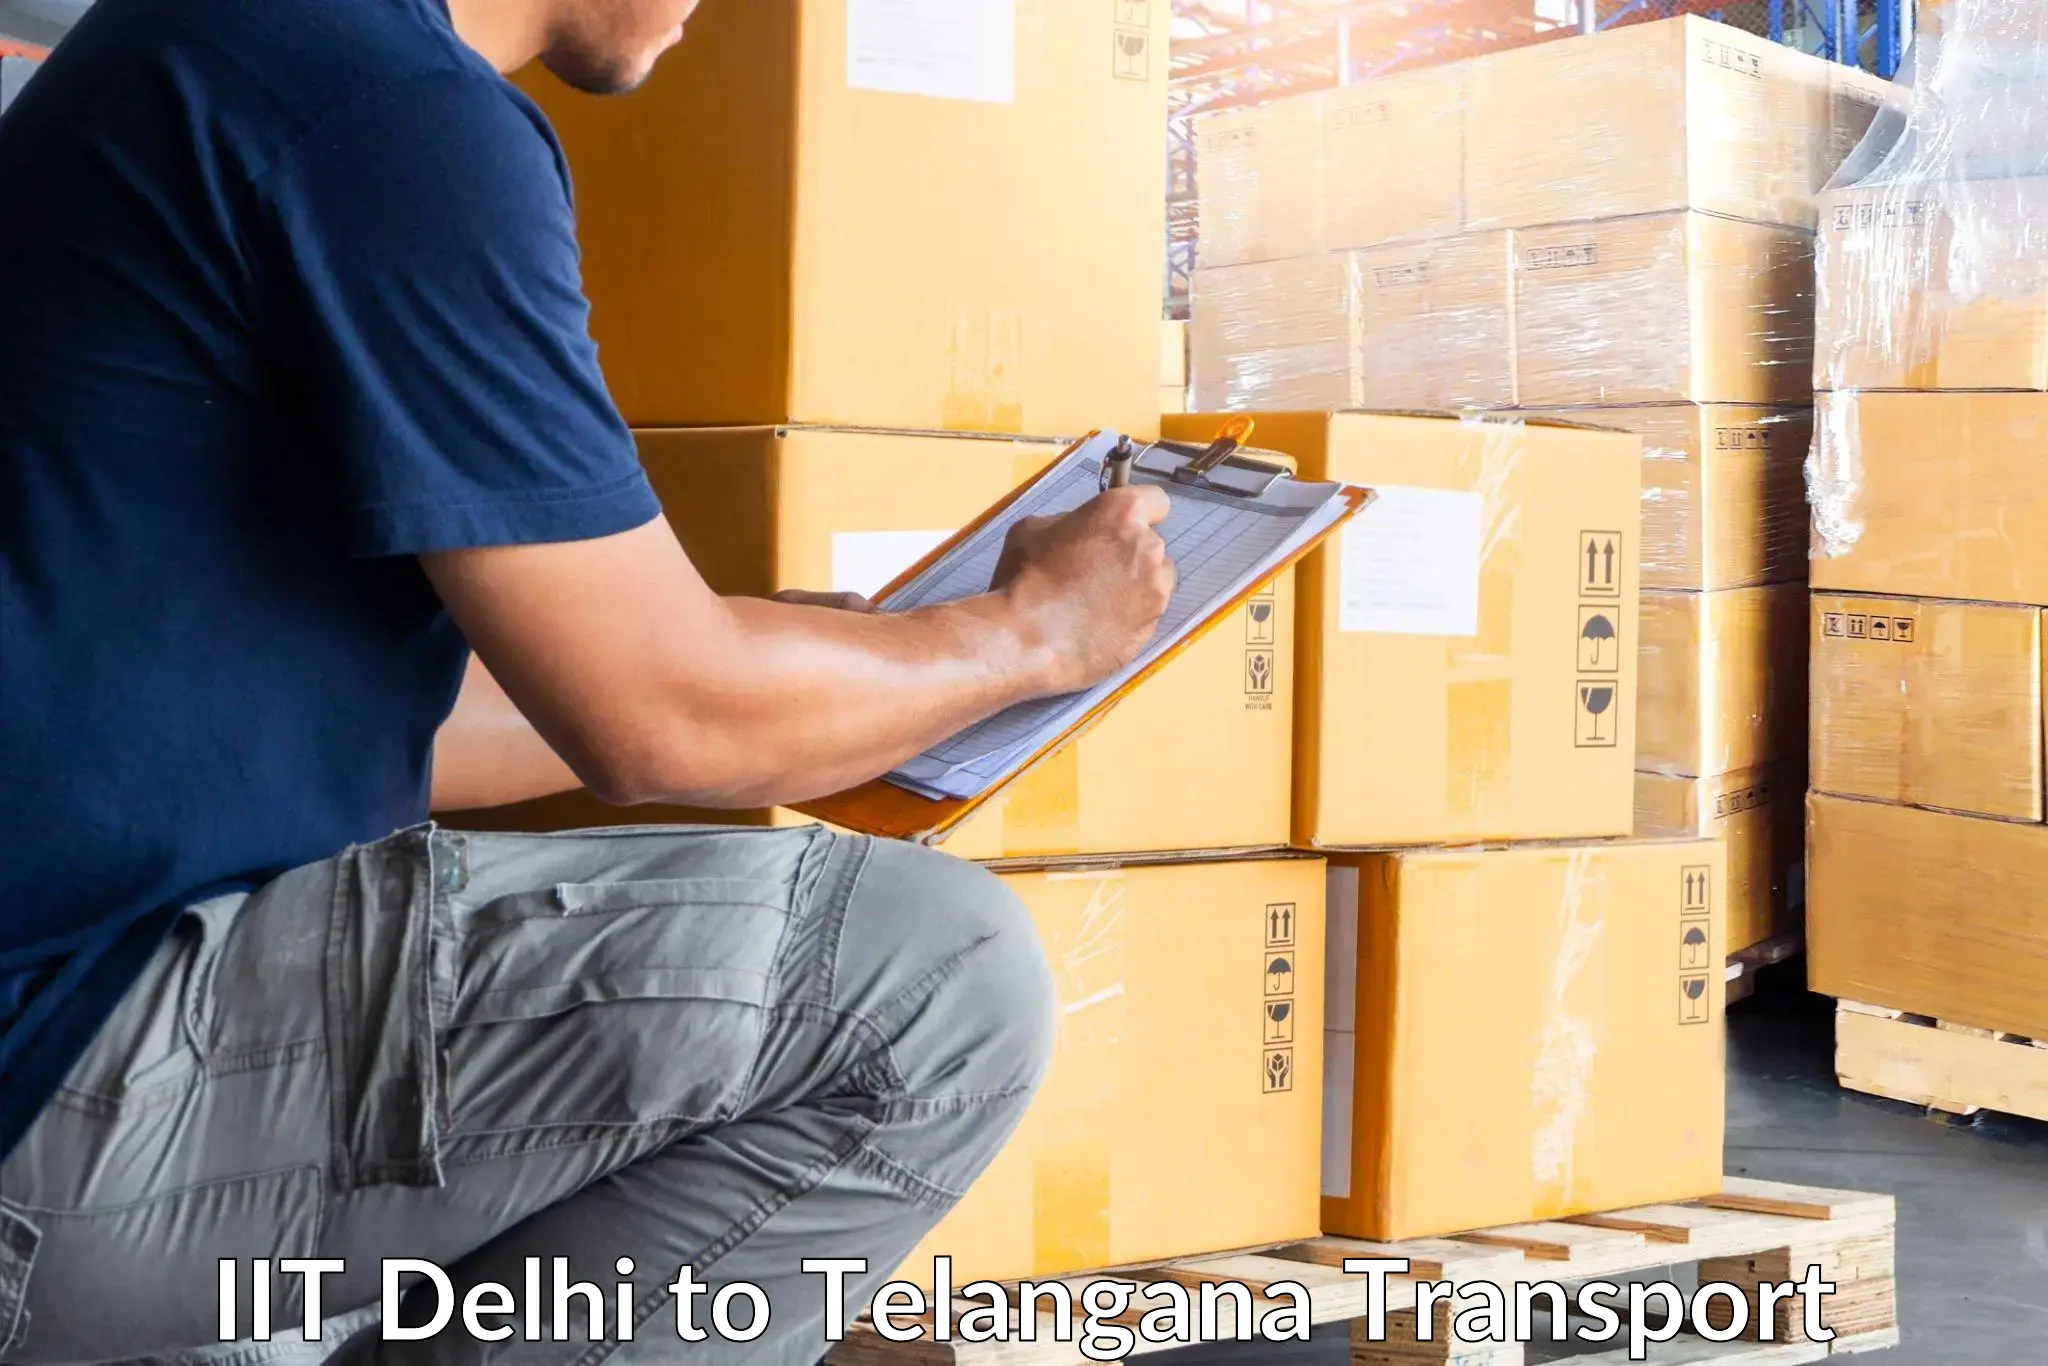 Container transport service IIT Delhi to Bellampalli